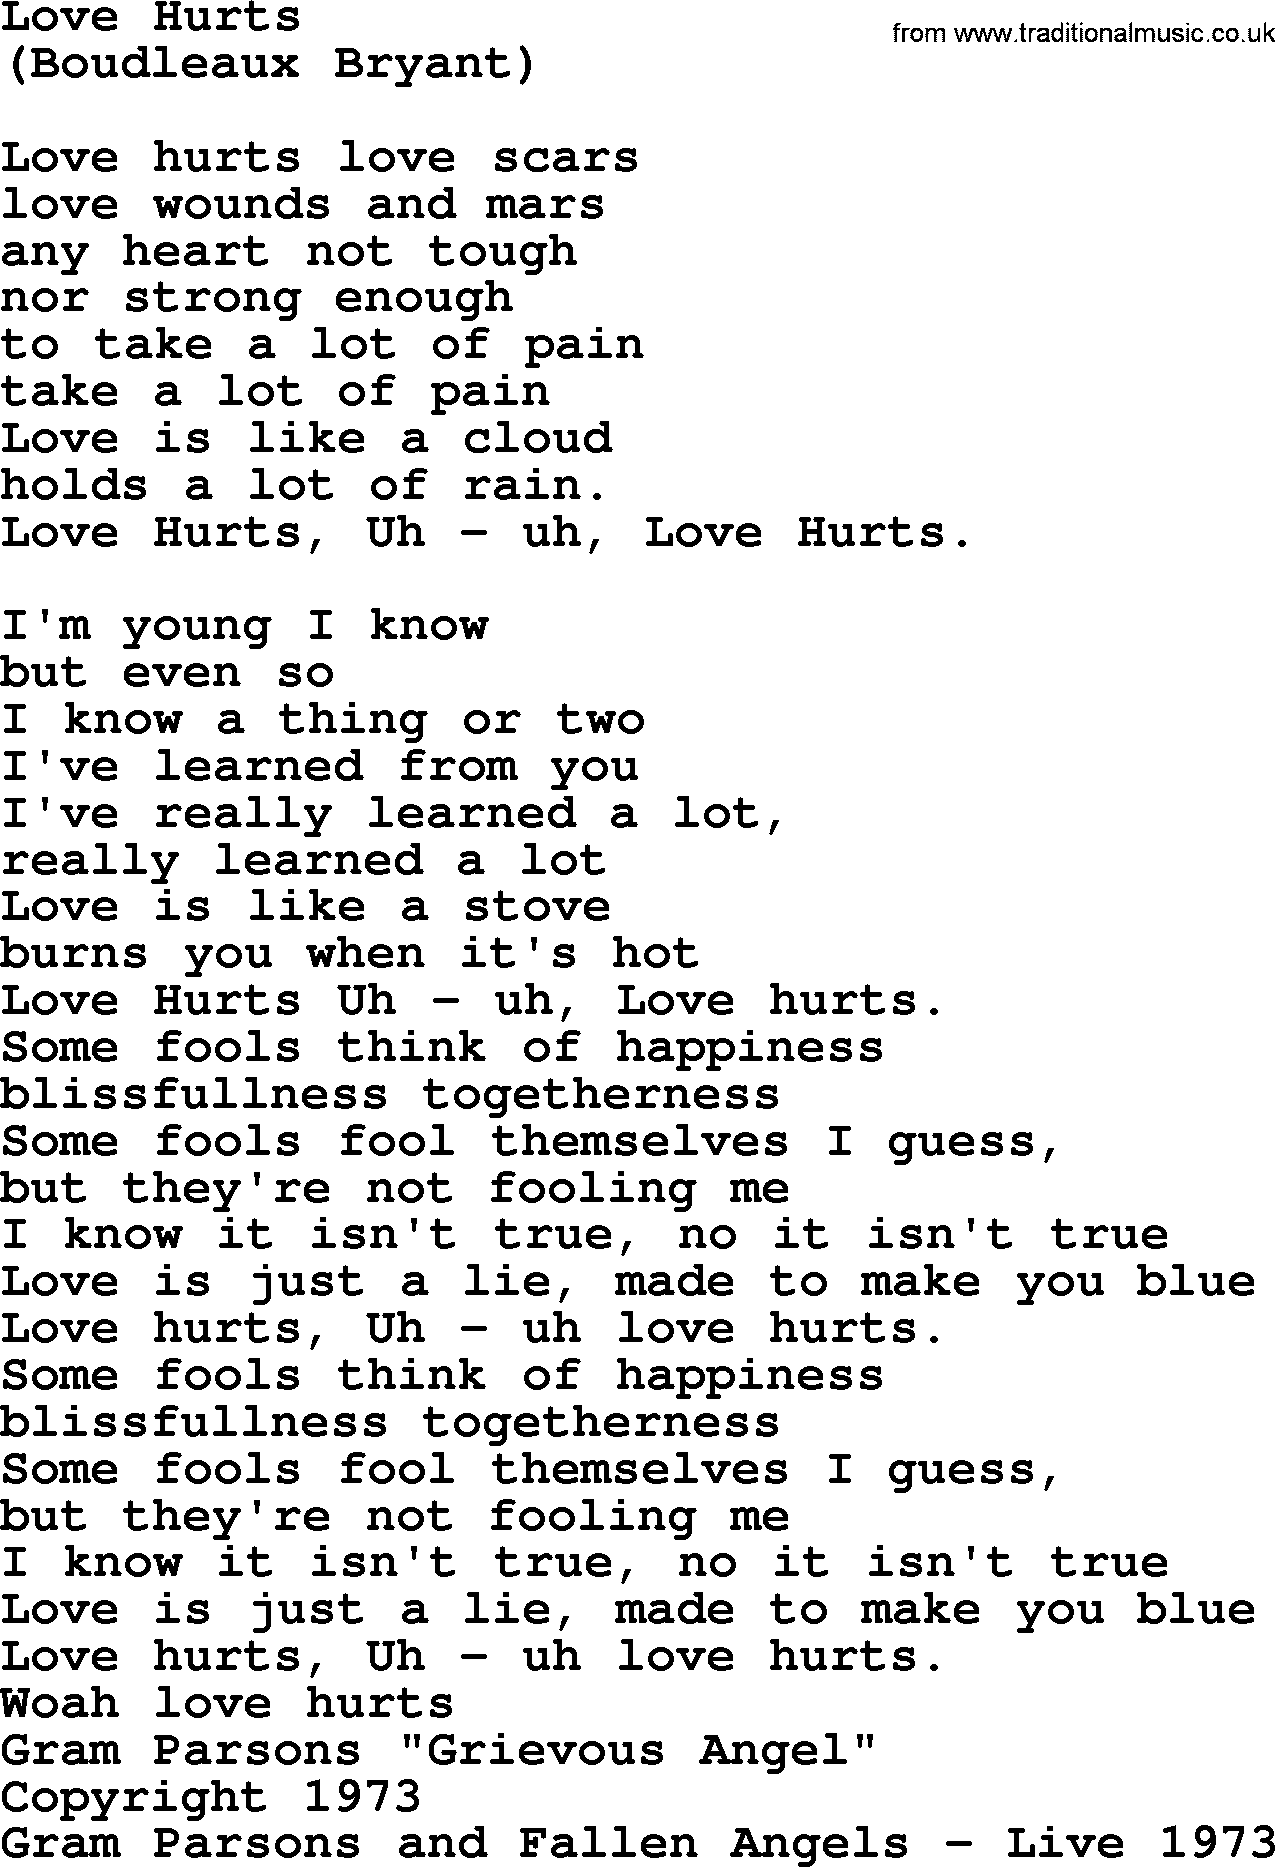 The Byrds song Love Hurts, lyrics